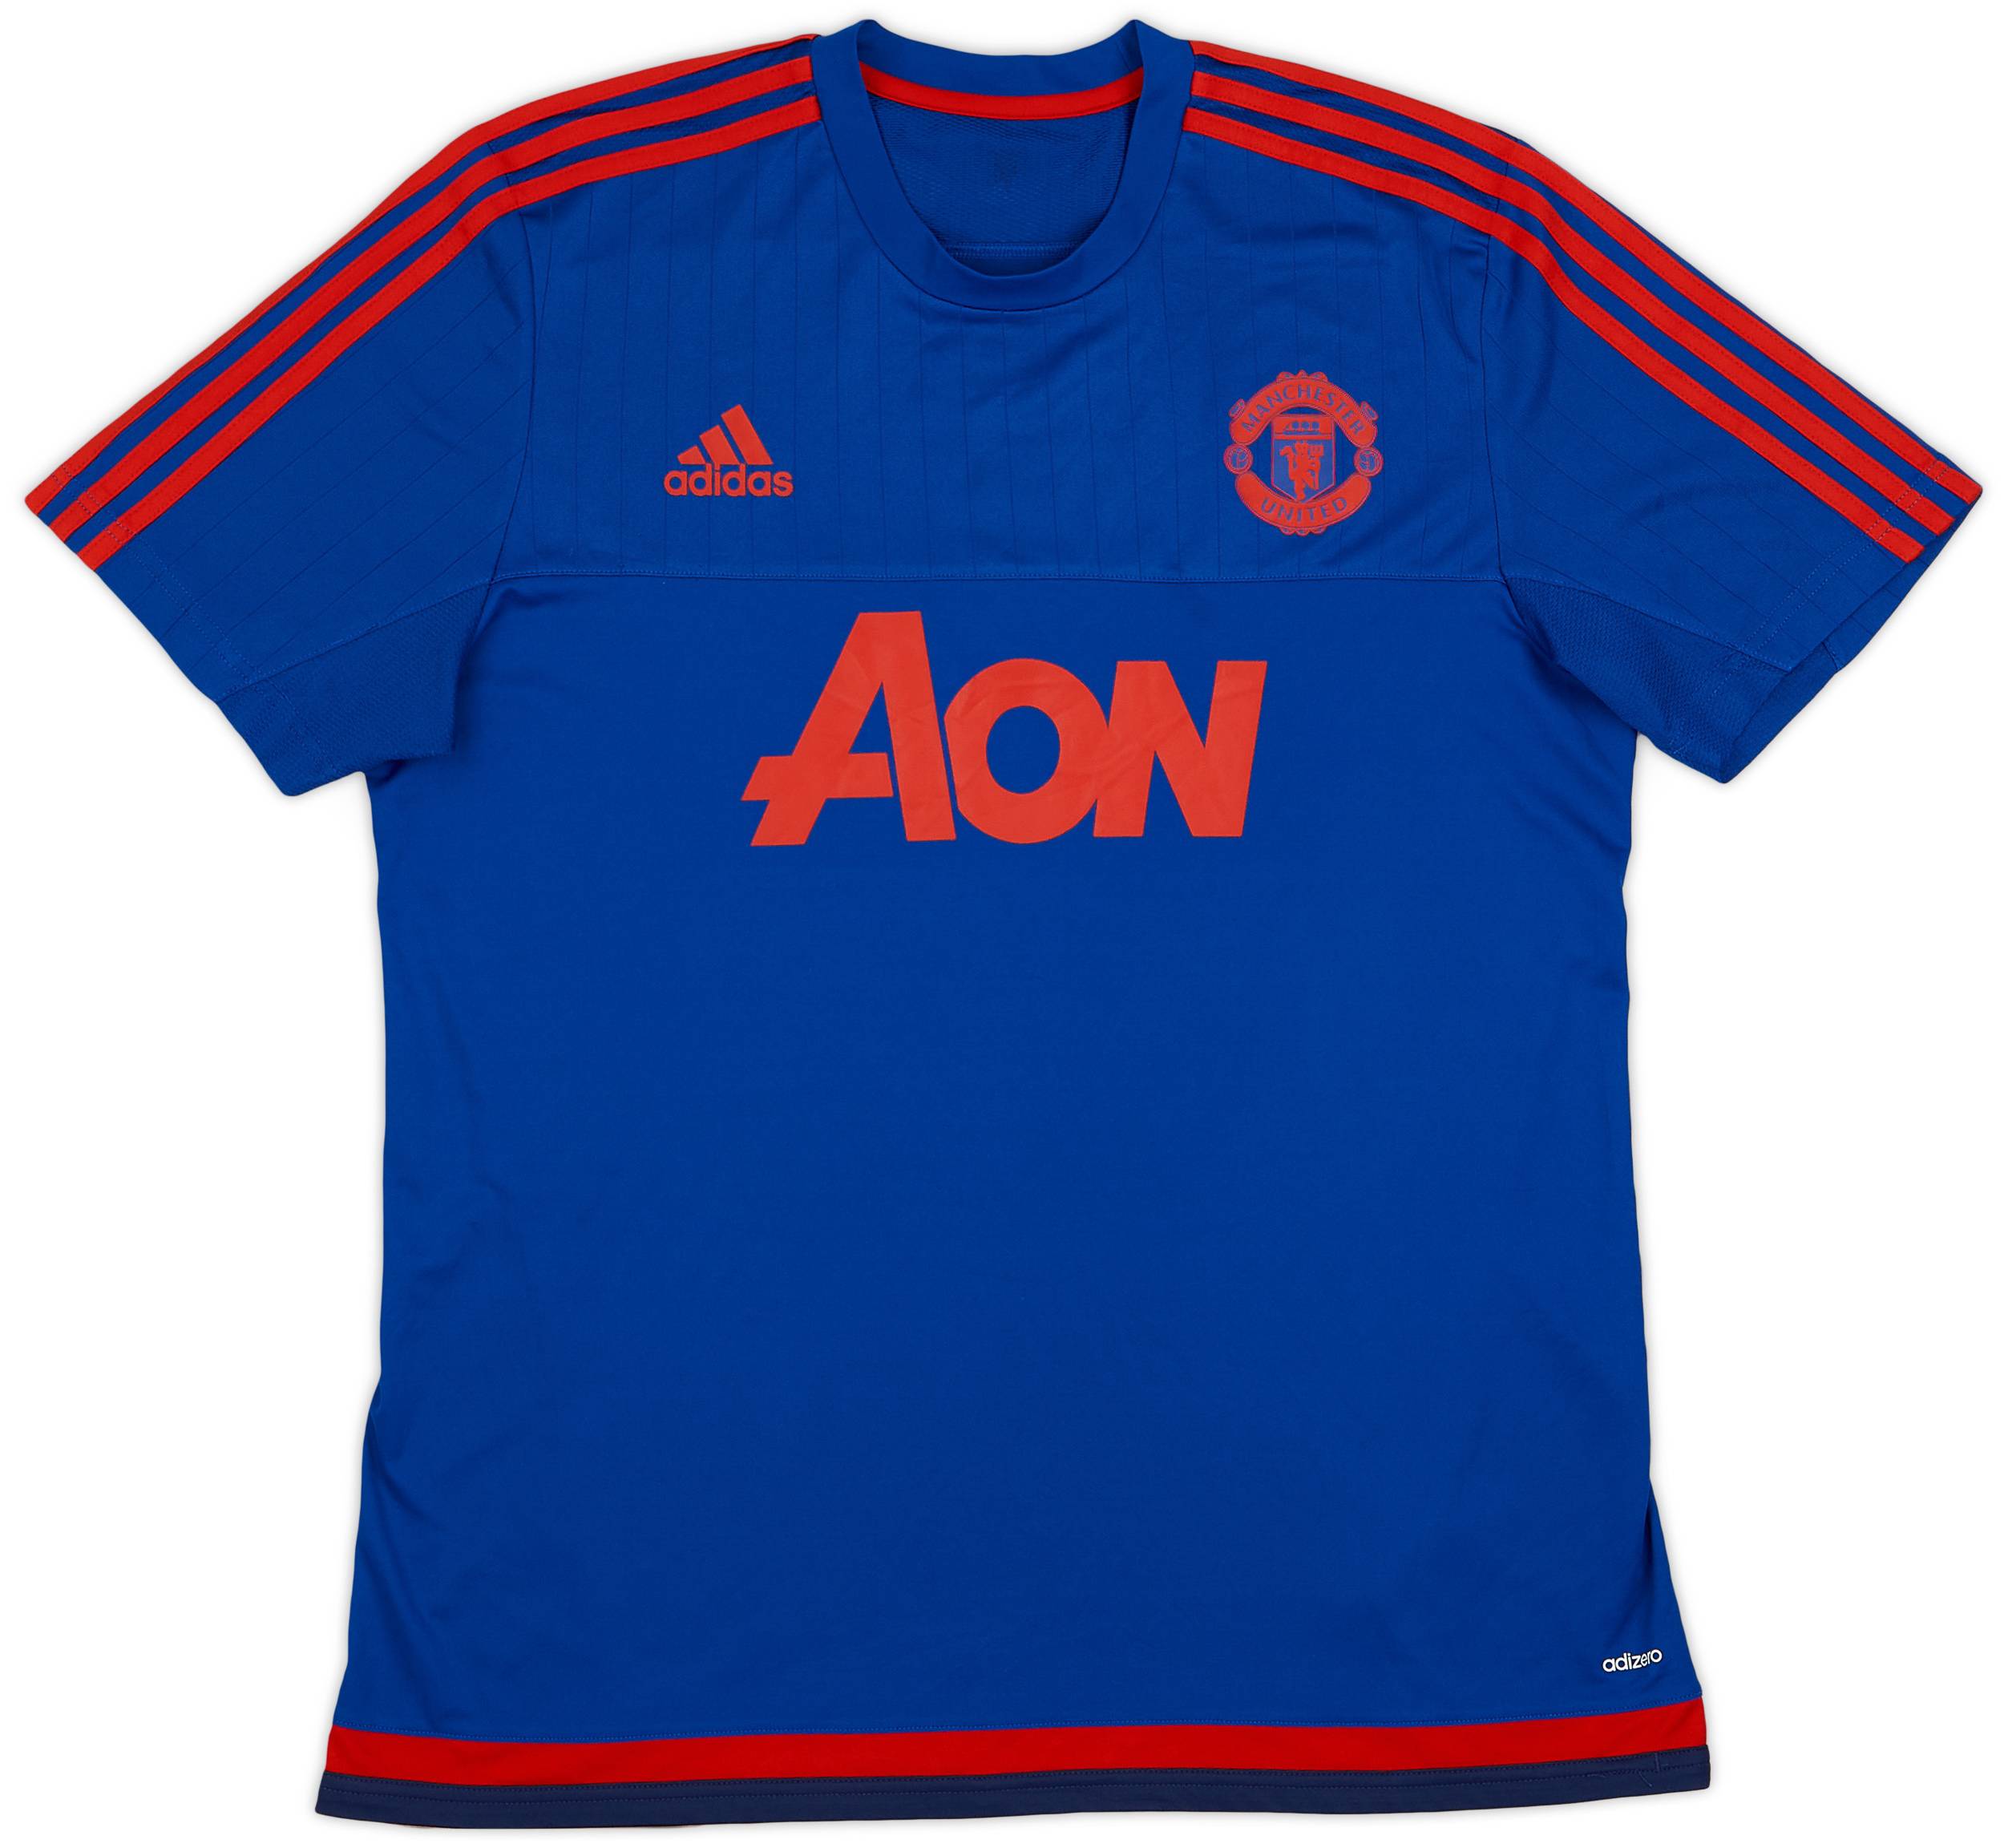 2015-16 Manchester United adidas Training Shirt - 8/10 - (XL)